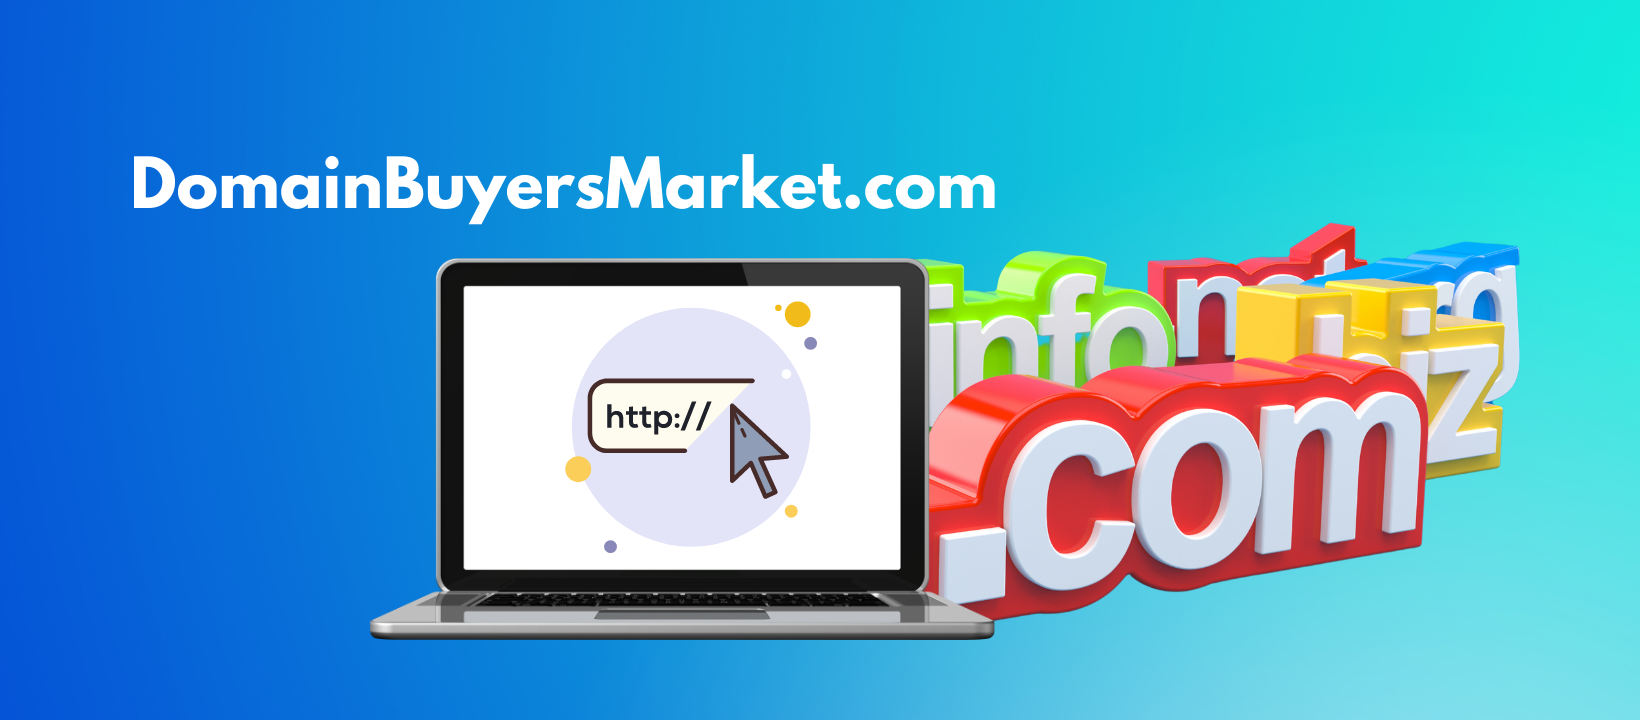 Domain Buyers Market logo.